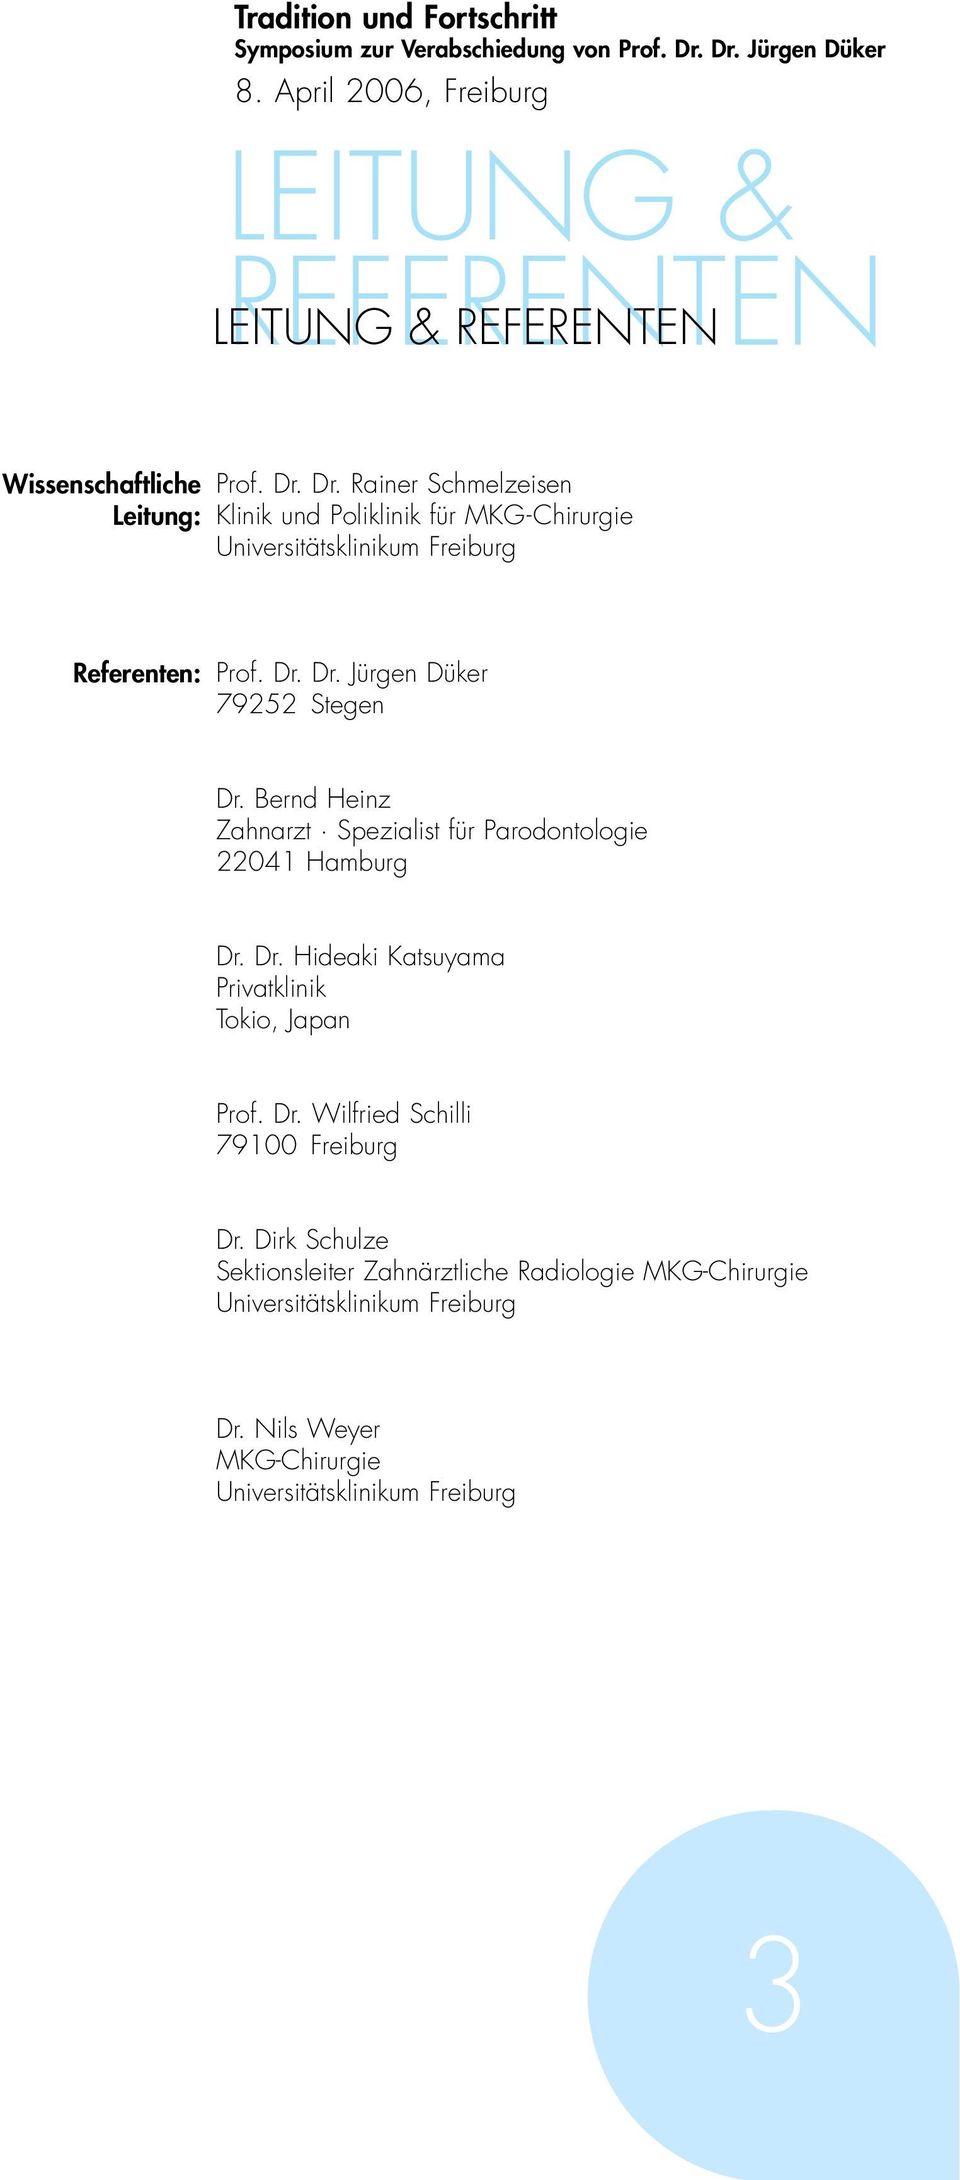 Dr. Jürgen Düker 79252 Stegen Dr. Bernd Heinz Zahnarzt Spezialist für Parodontologie 22041 Hamburg Dr. Dr. Hideaki Katsuyama Privatklinik Tokio, Japan Prof.